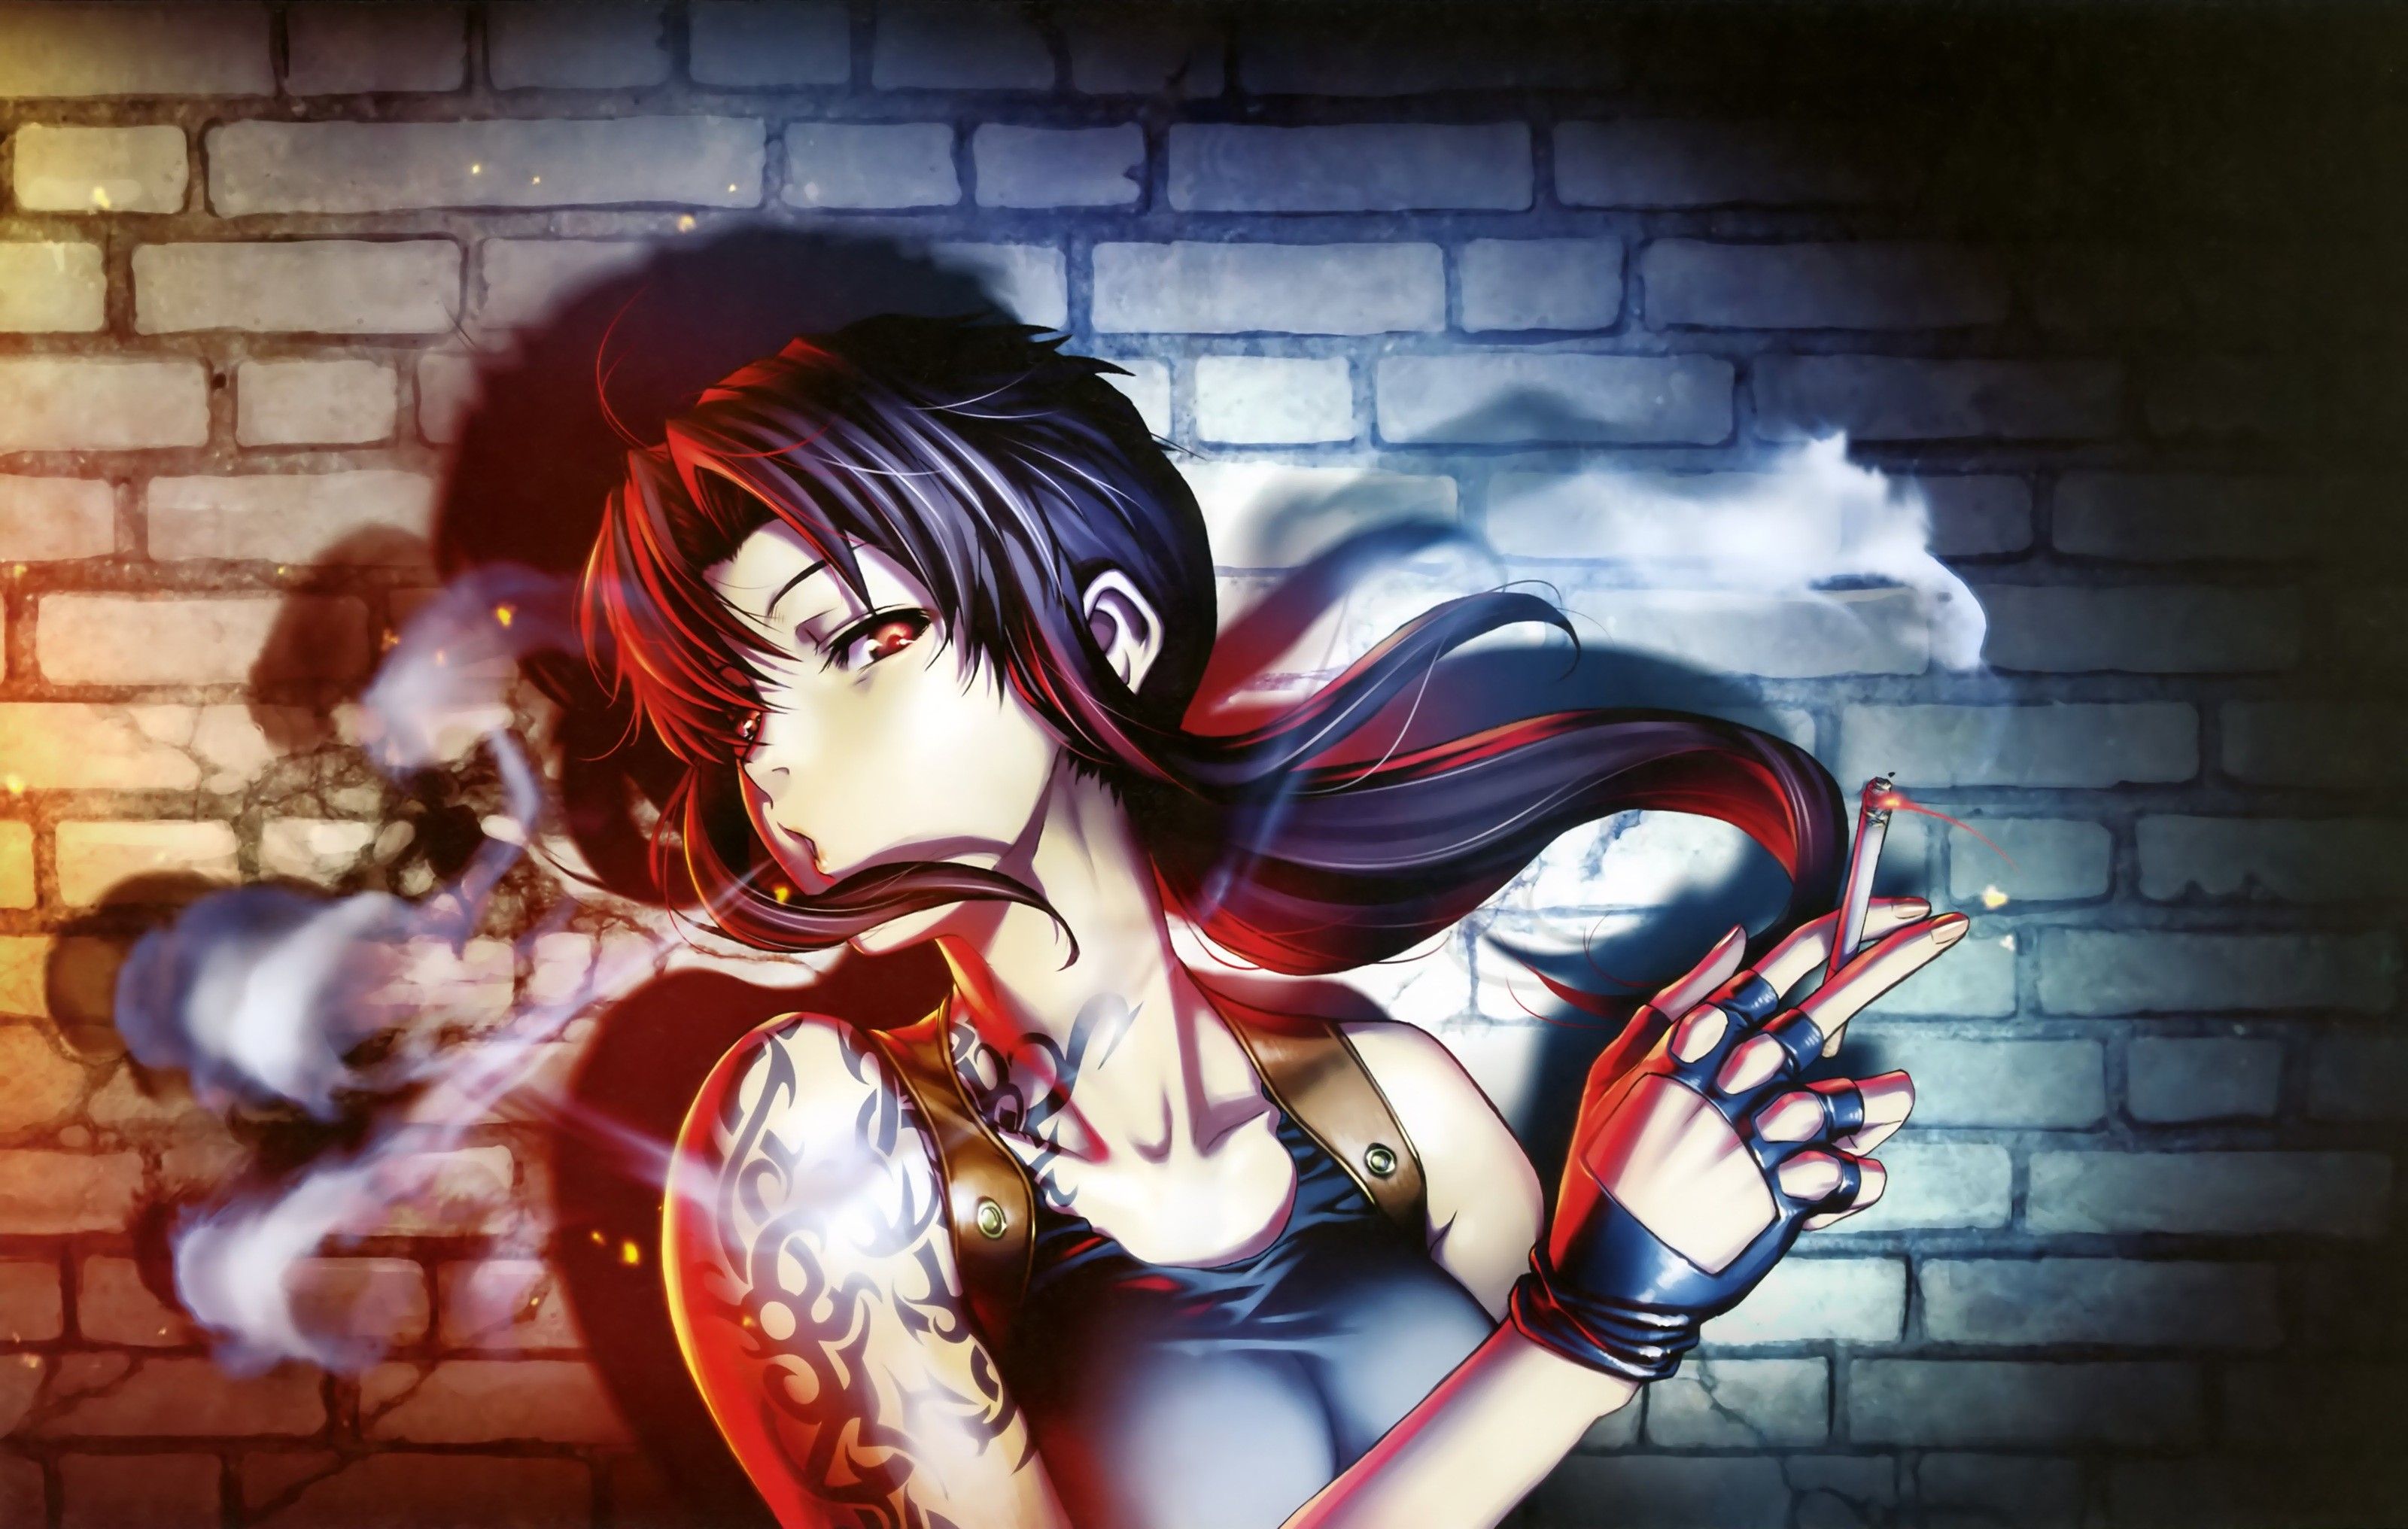 Black Lagoon Anime Girl Smoking 4k, HD Anime, 4k Wallpaper, Image, Background, Photo and Picture